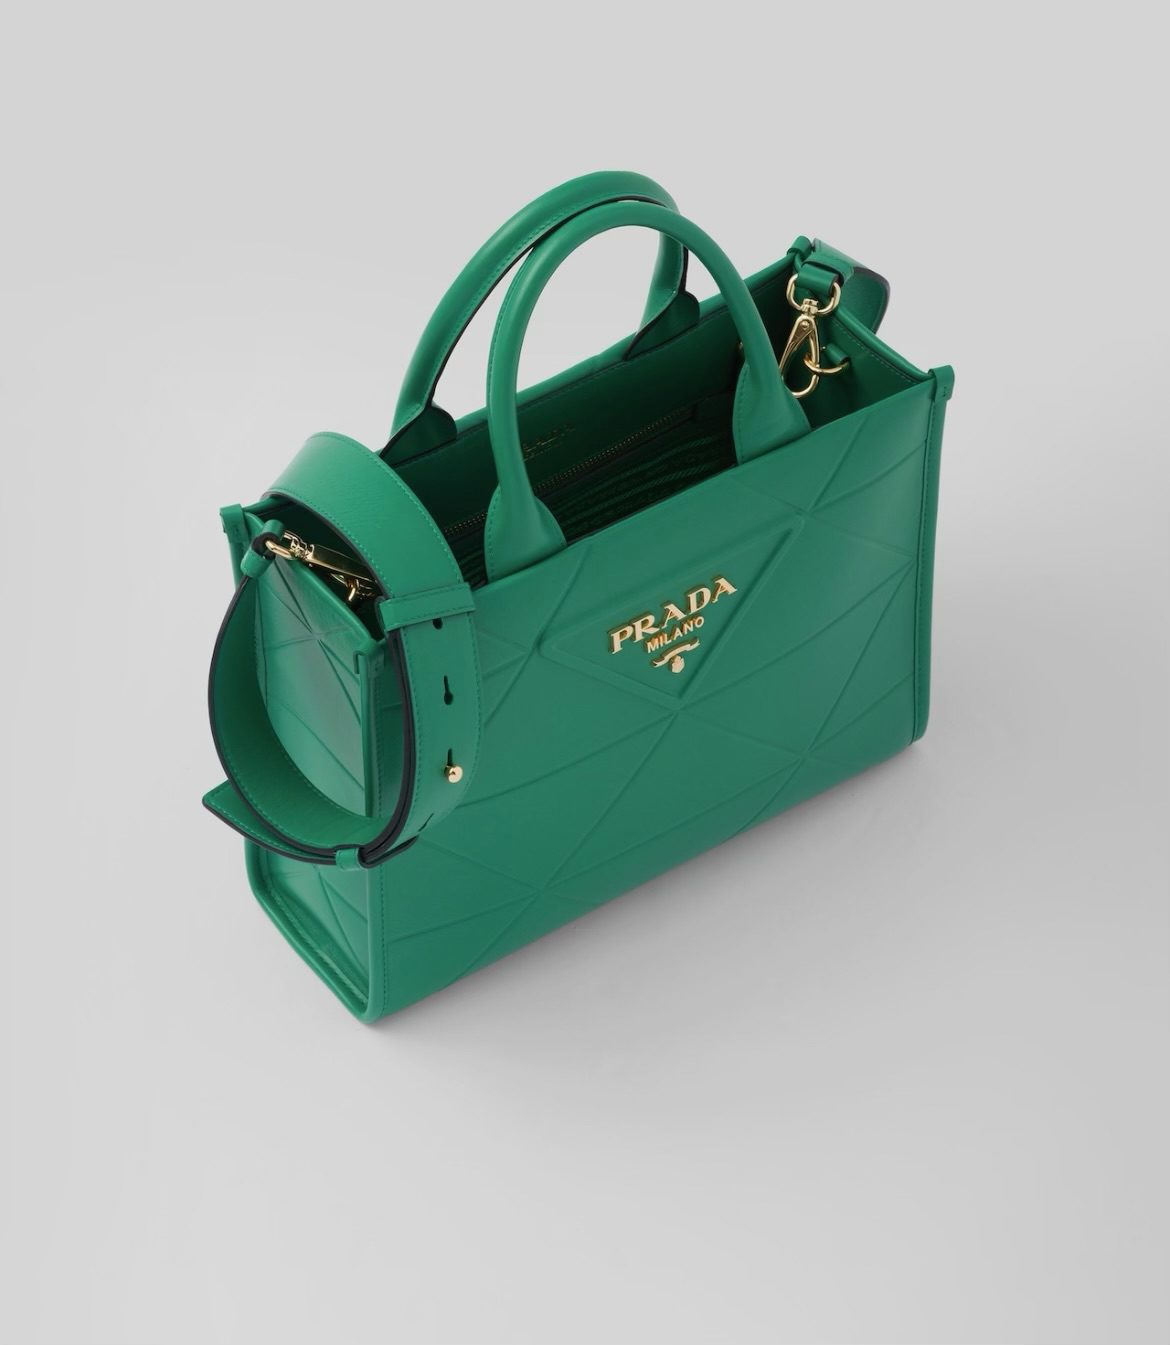 new Prada bag in green leather 